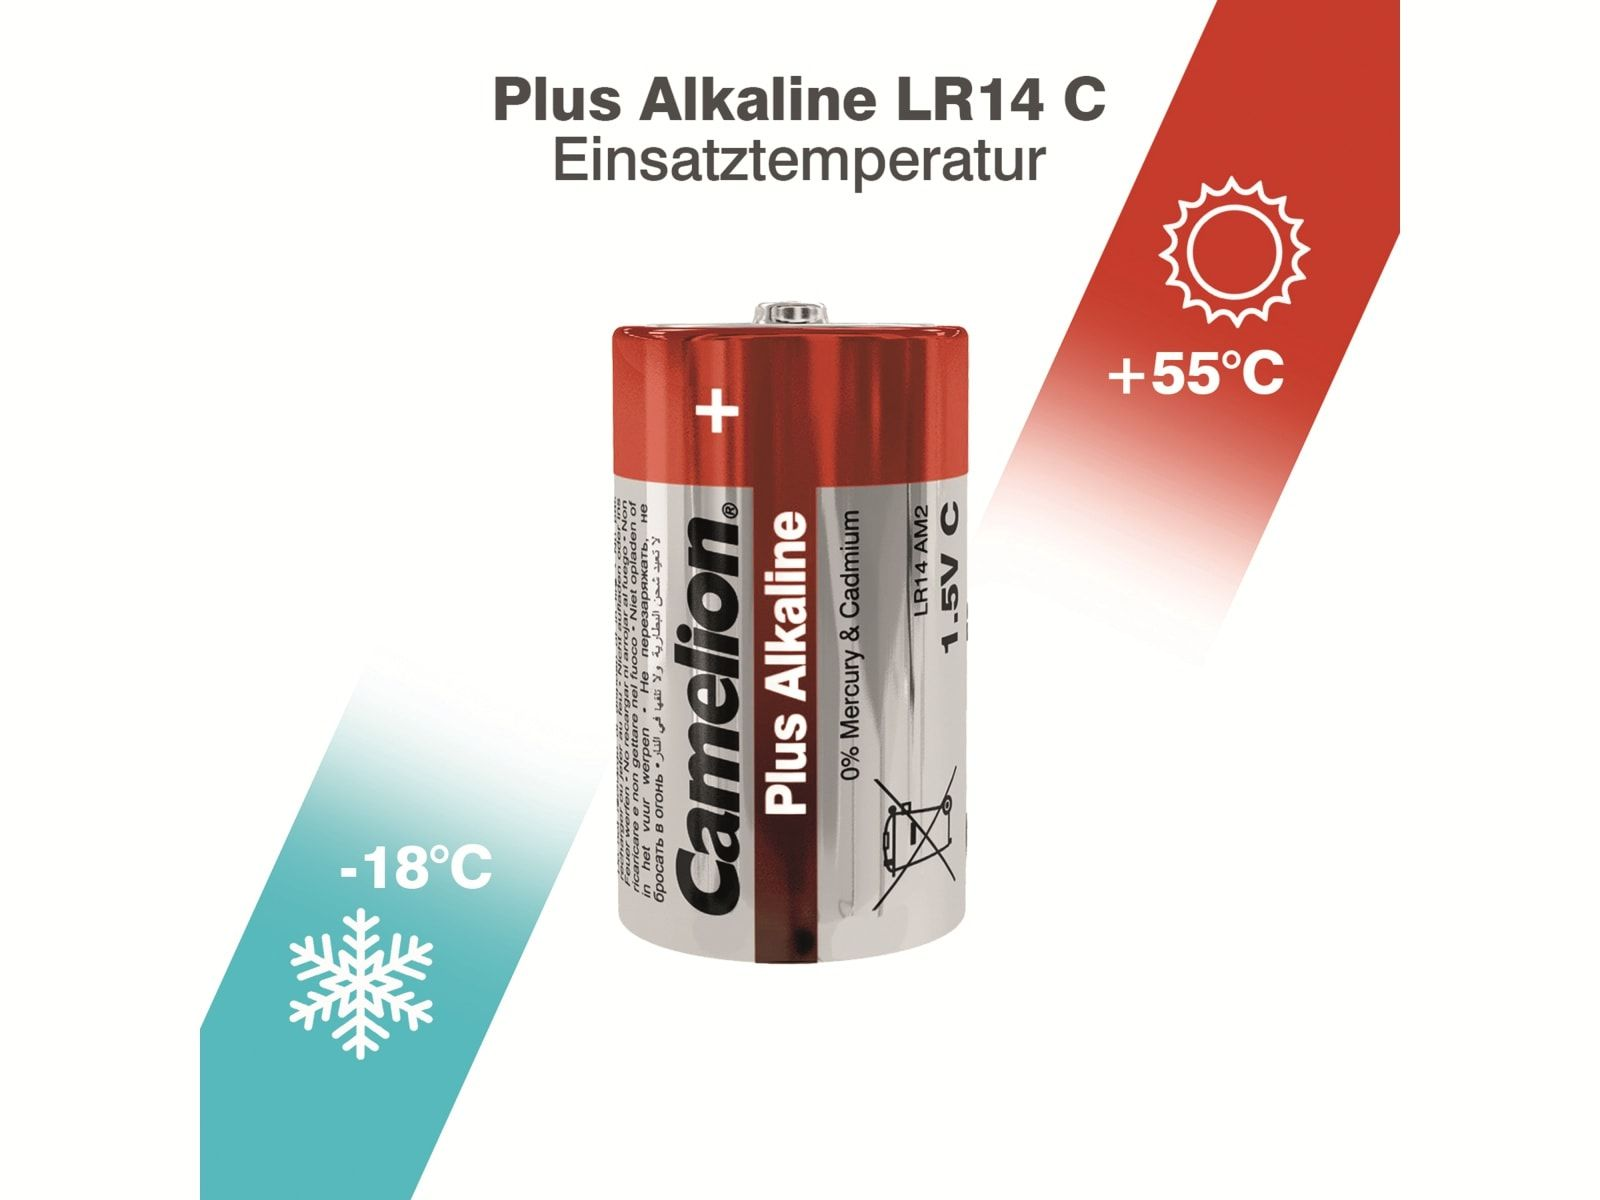 Stück Batterie CAMELION Plus-Alkaline, 2 LR14, Baby-Batterie, Alkaline